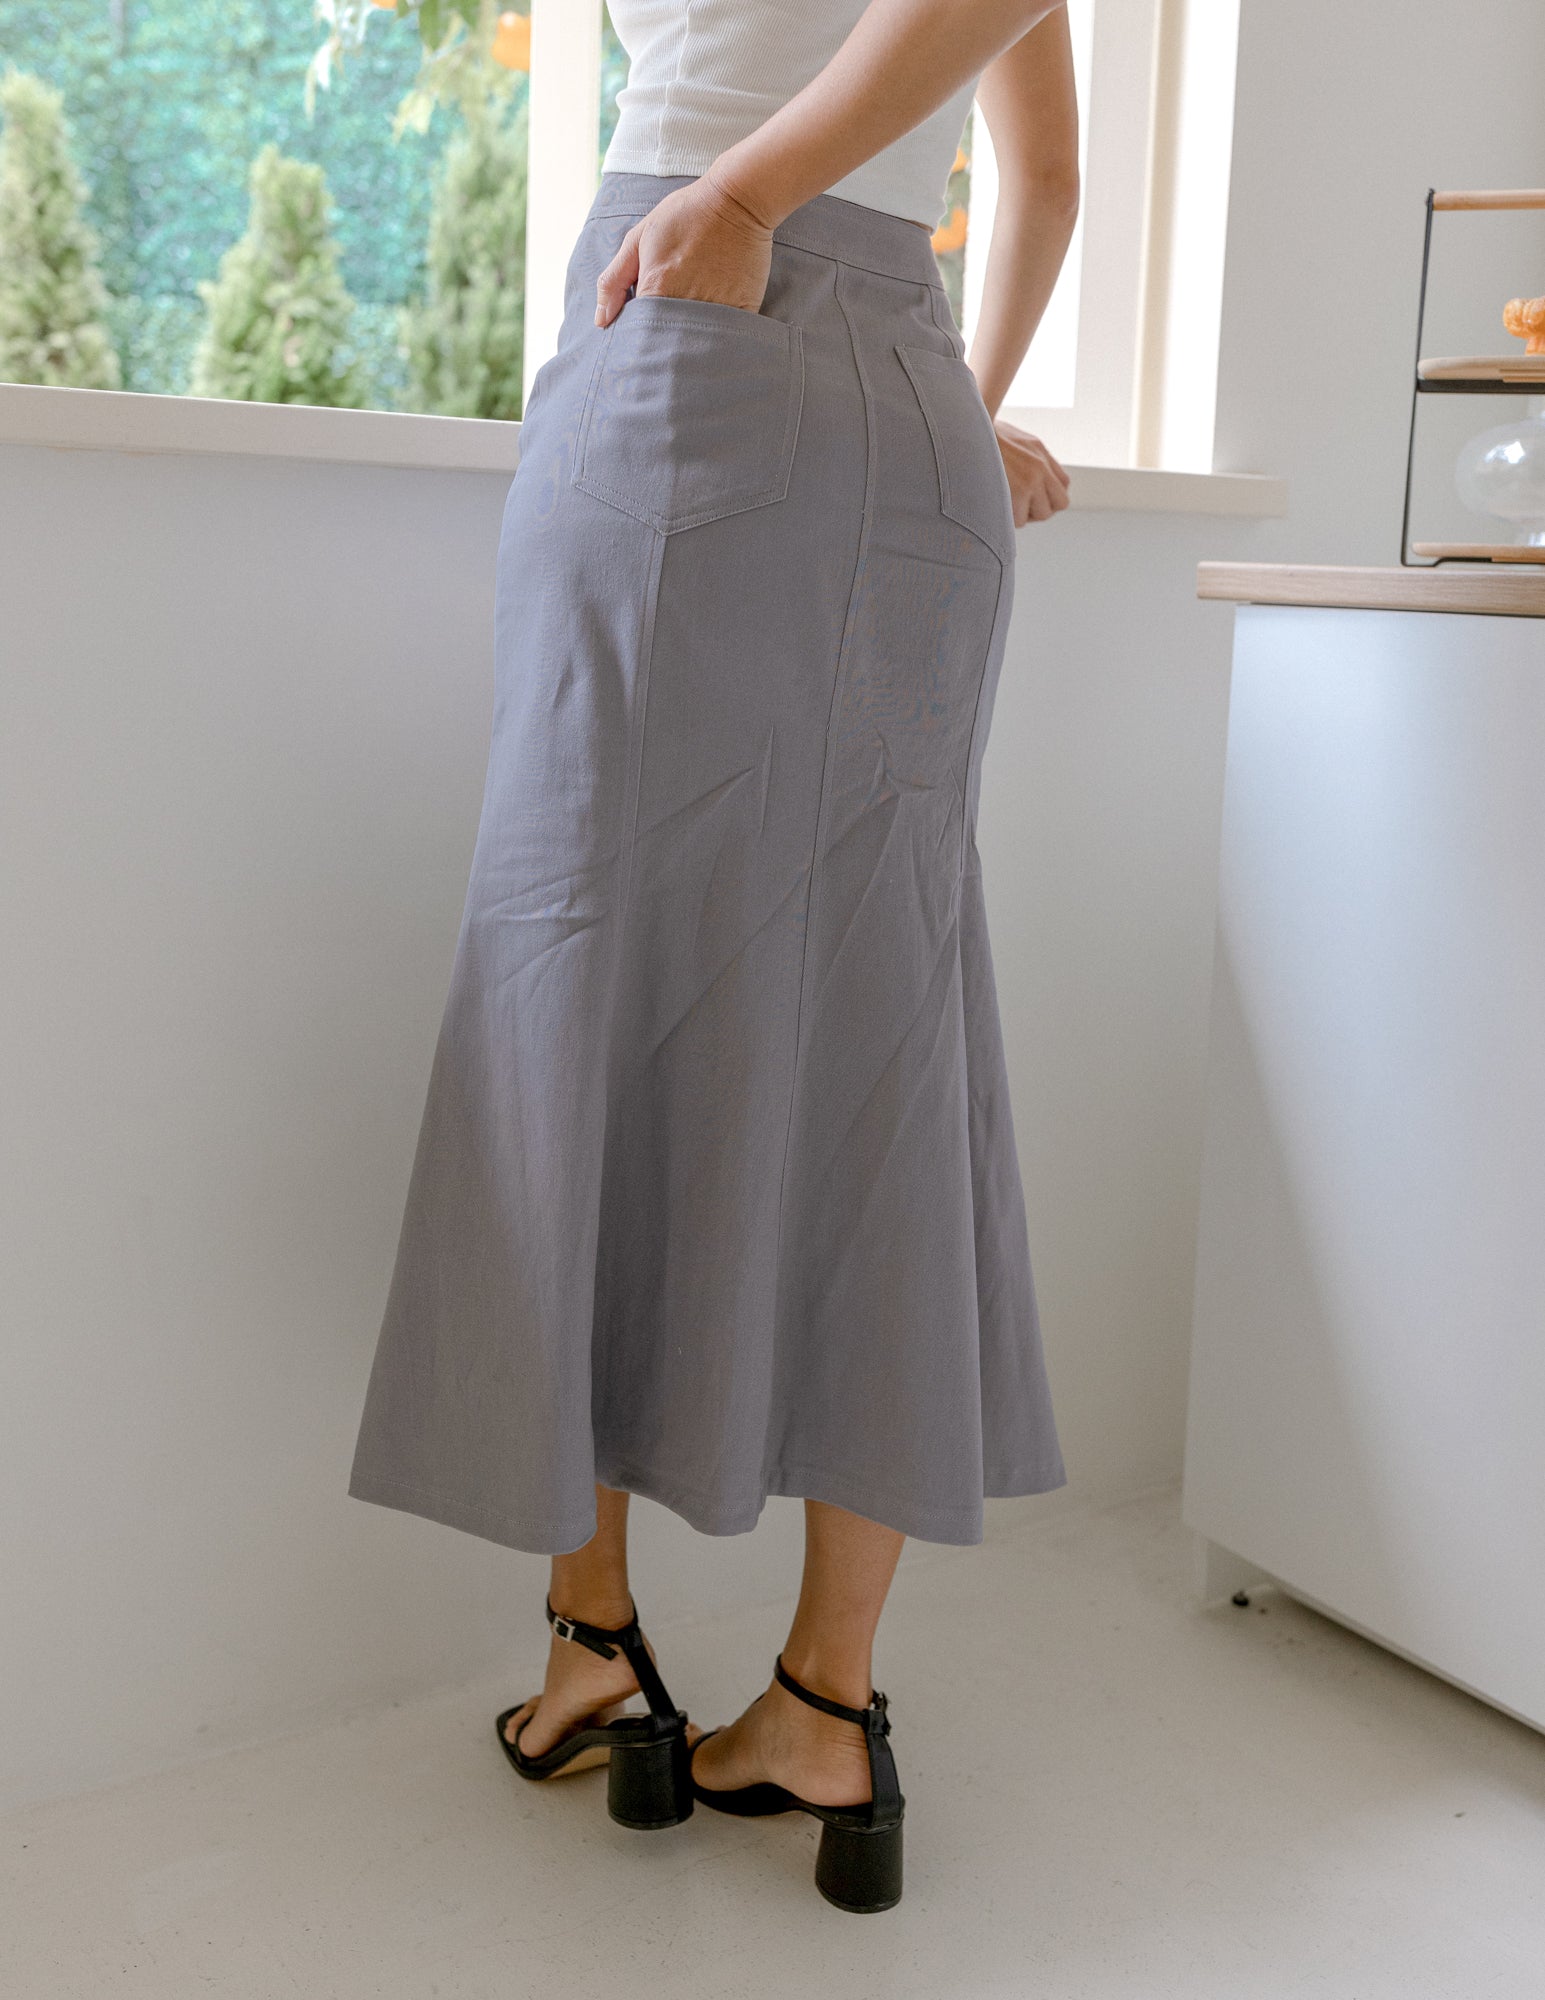 Elise Skirt in Grey